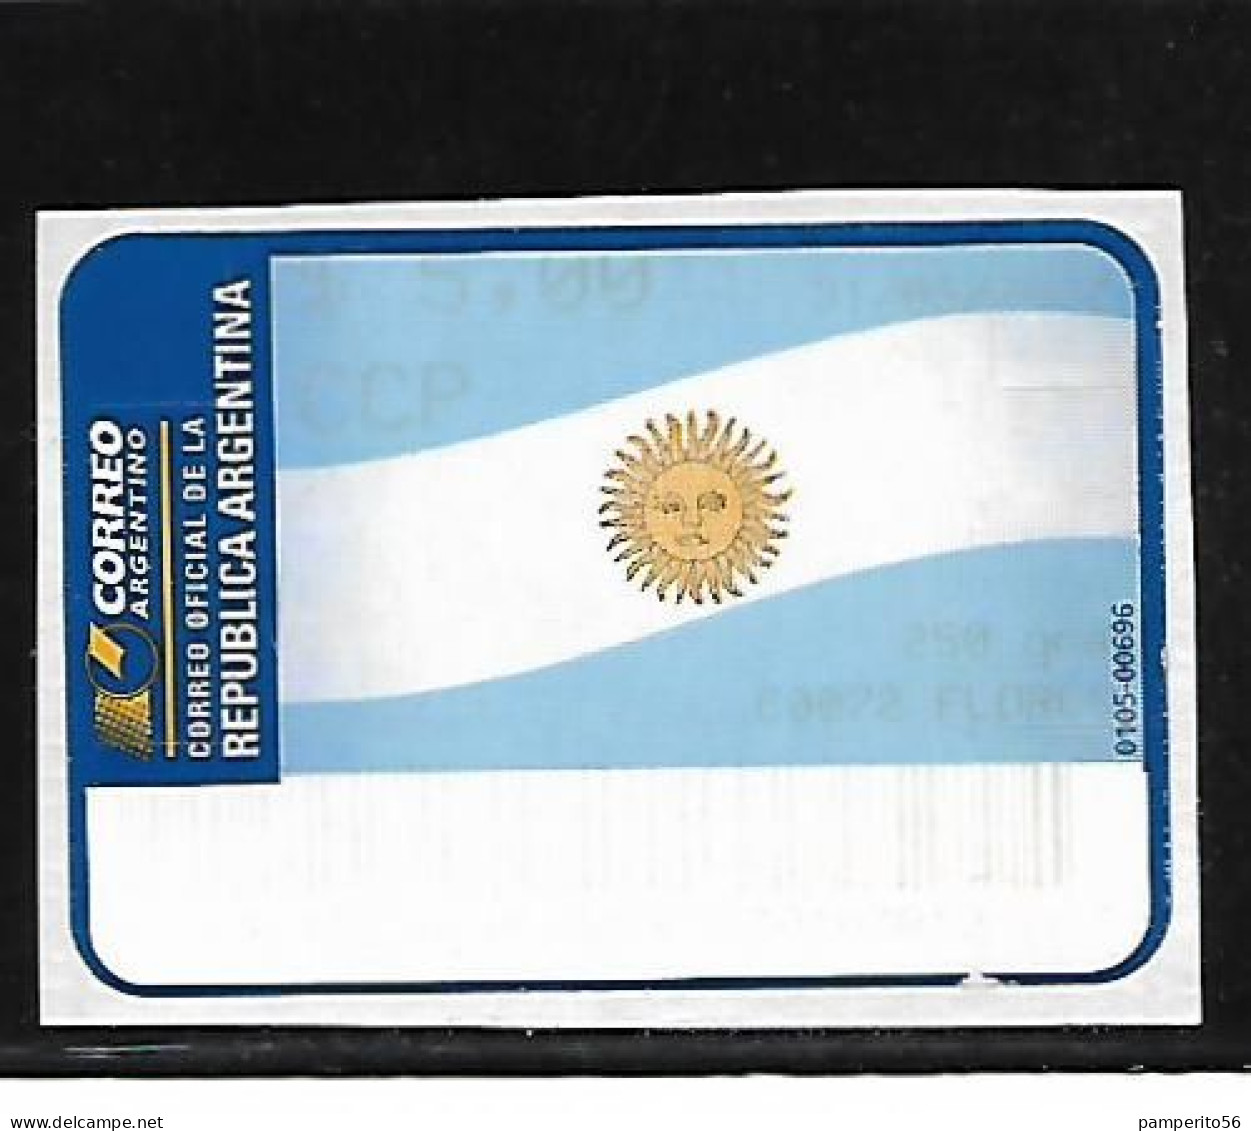 ARGENTINA - AÑO 2002 - Etiqueta De Franqueo CCP 20 Grs - Flores - Viñetas De Franqueo (Frama)